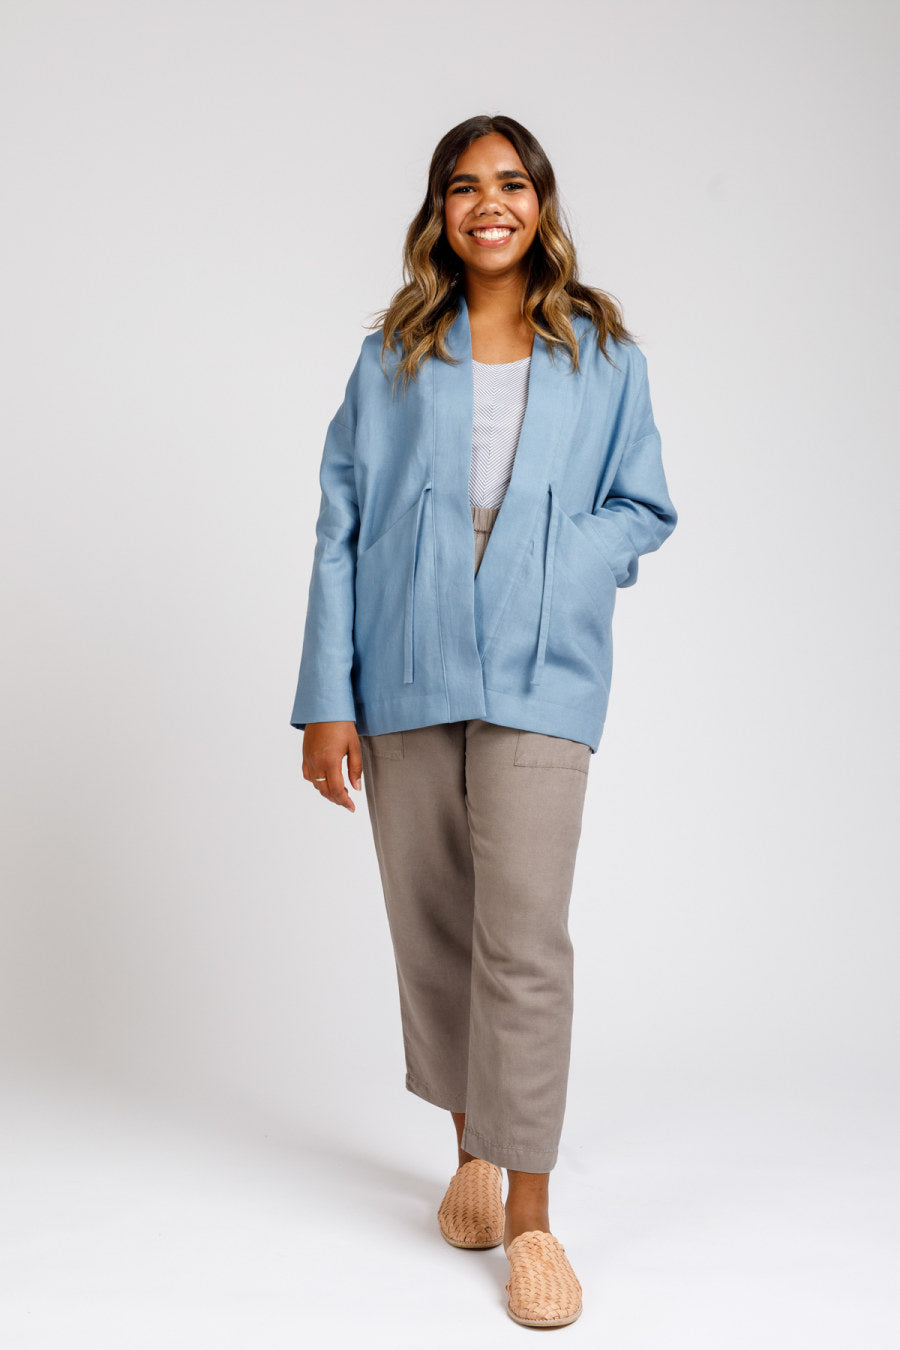 Megan Nielsen Hovea Jacket & Coat – Jenny Stitches Fabrics